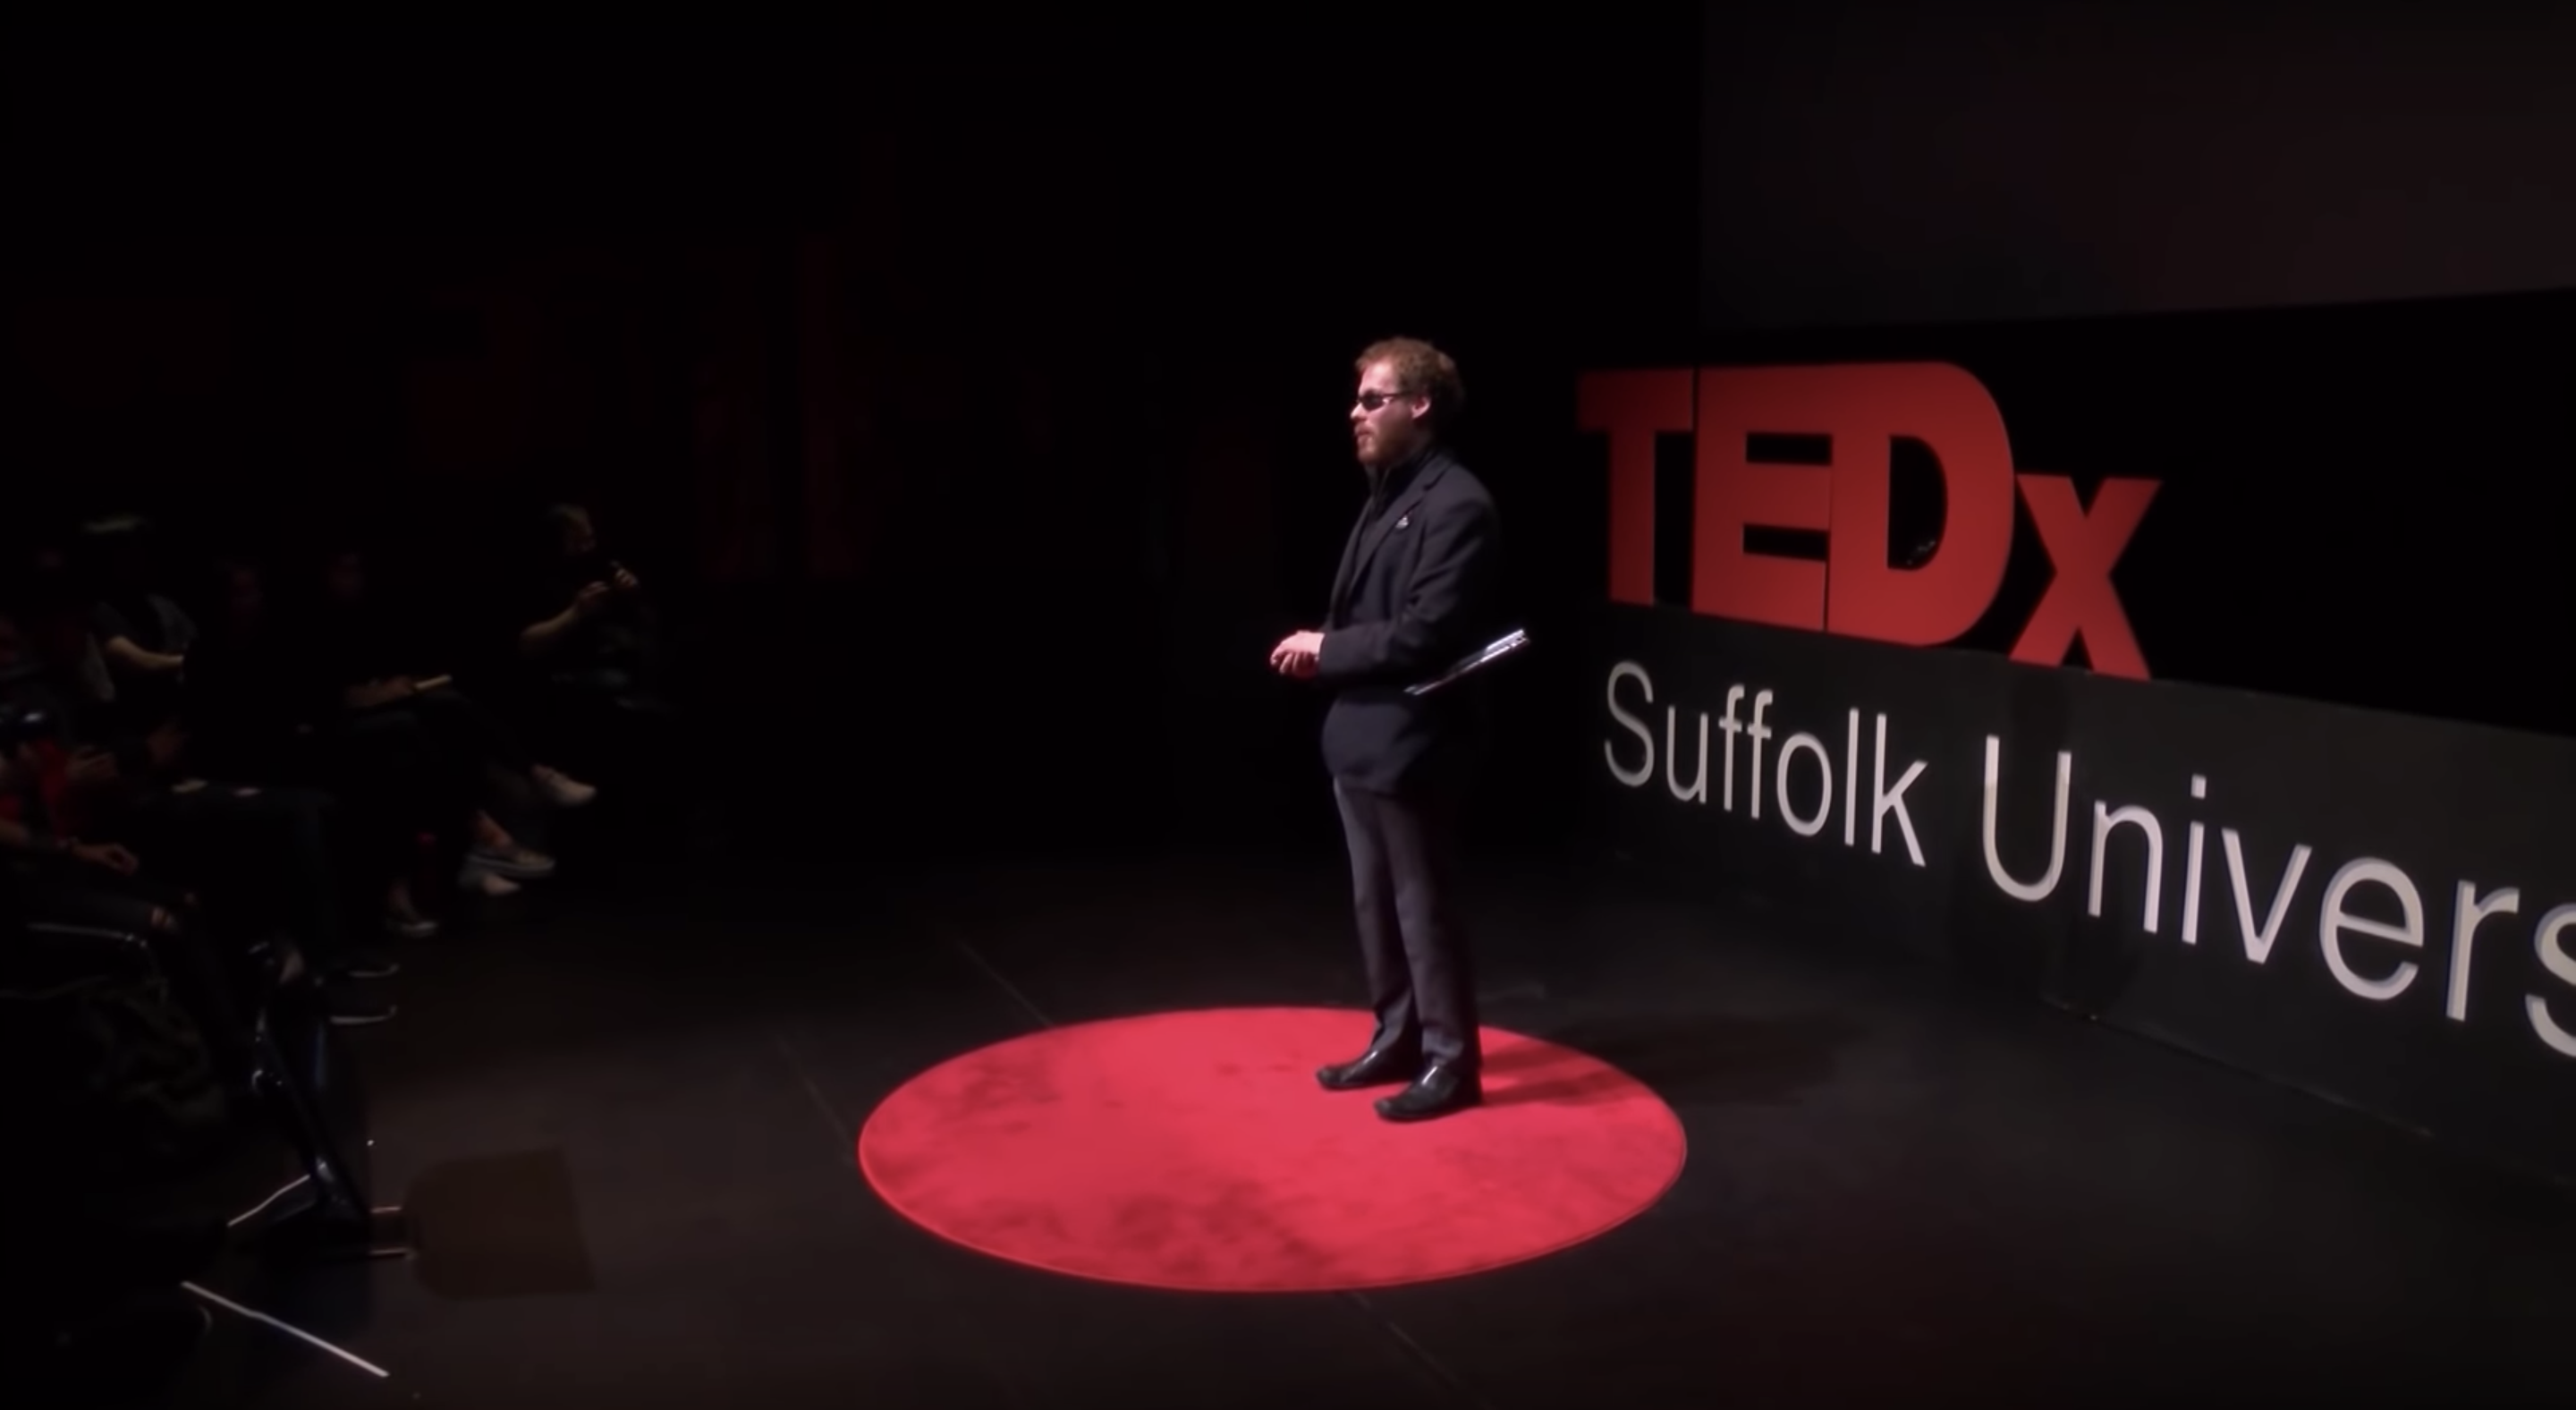 Matthew Shifrin giving a talk on Tedx stage Suffolk University